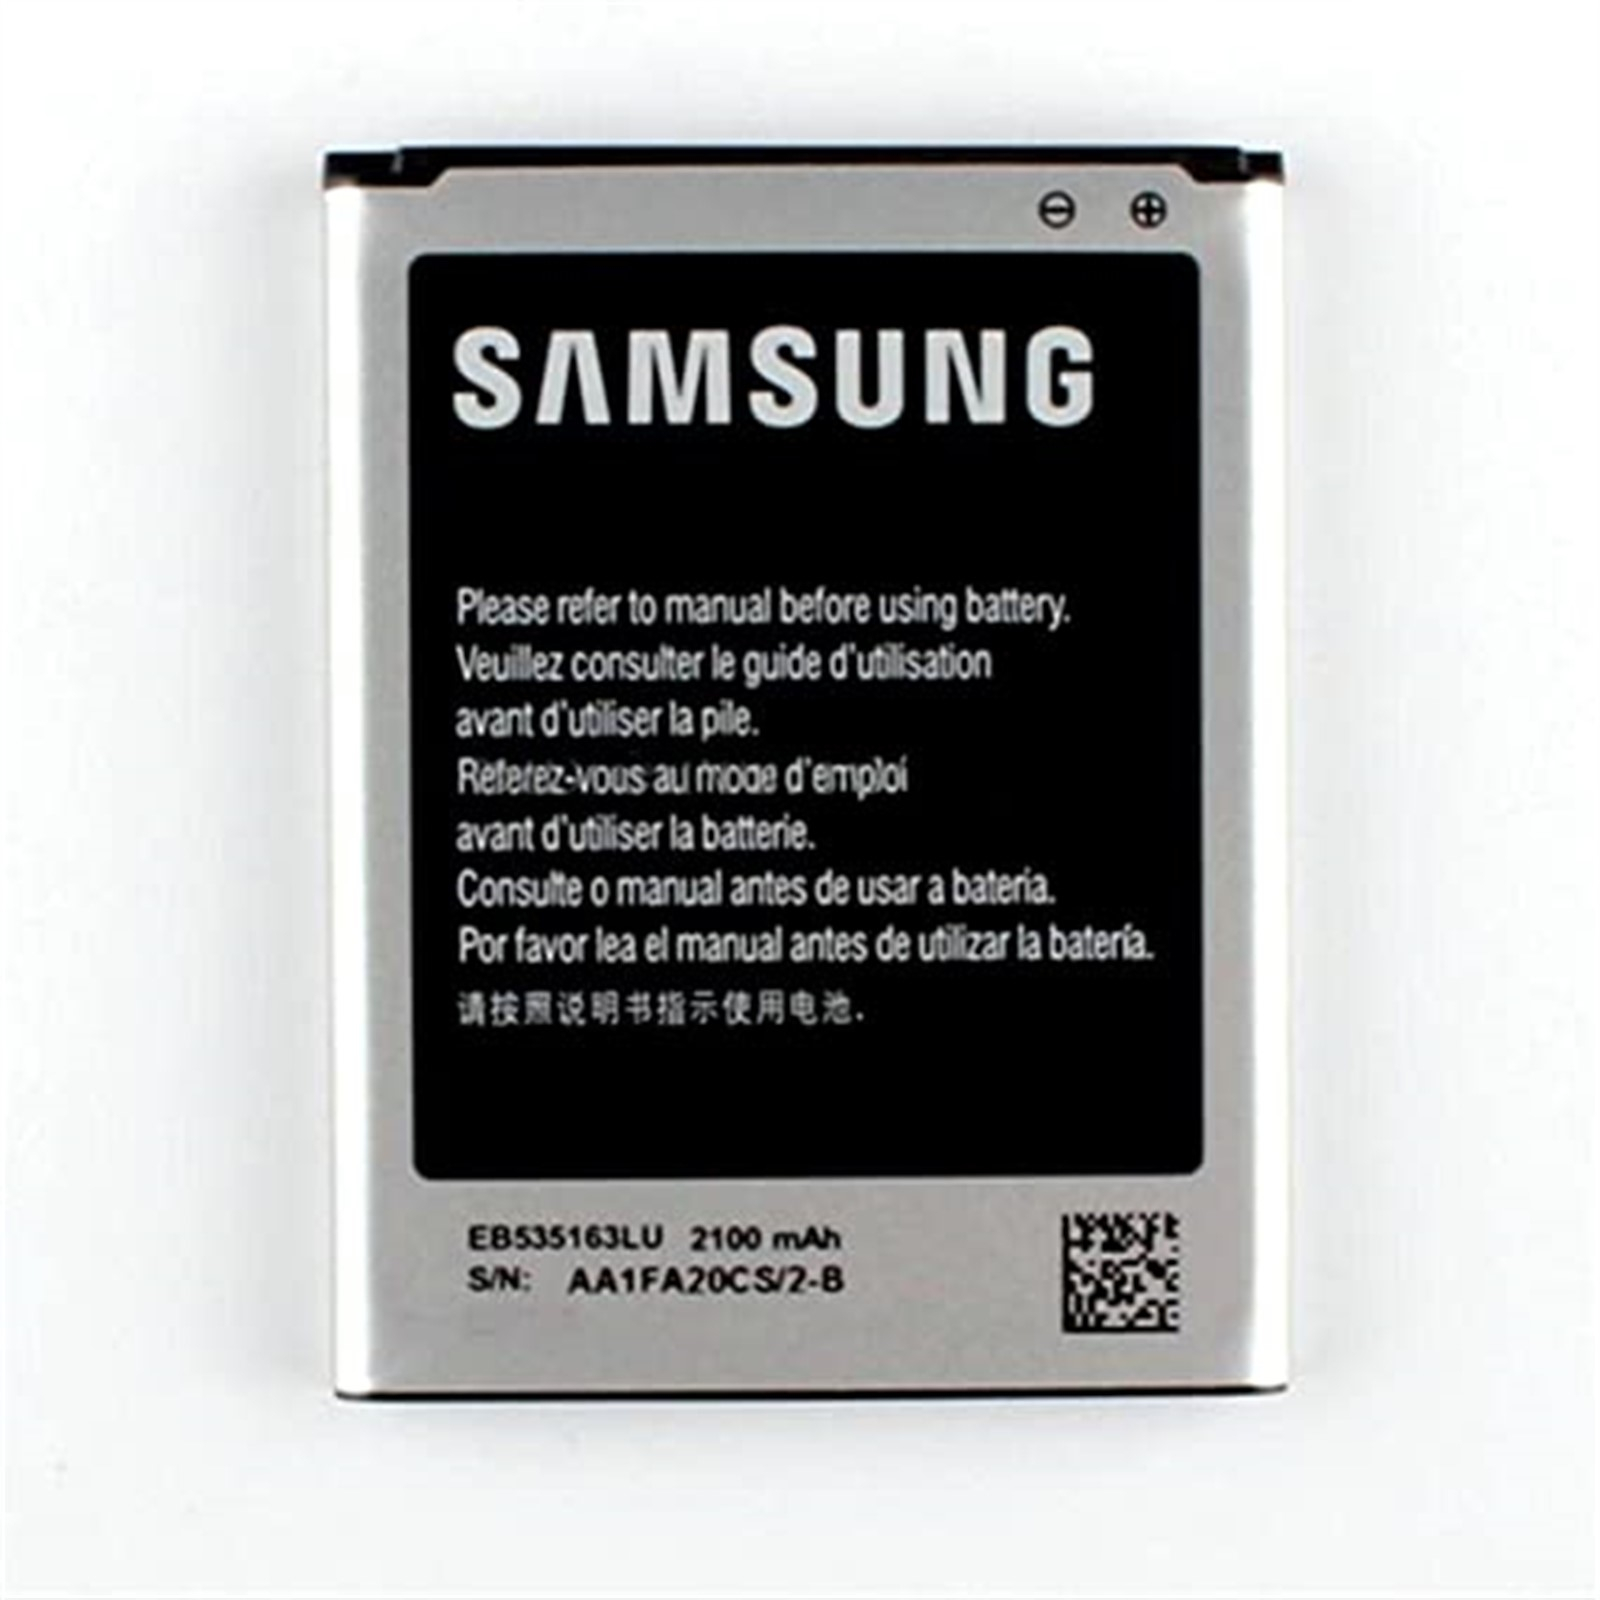 Augment Shinkan Sicily Cauti de ceva timp Acumulator Samsung Galaxy Neo i9082 EB535163LU ?